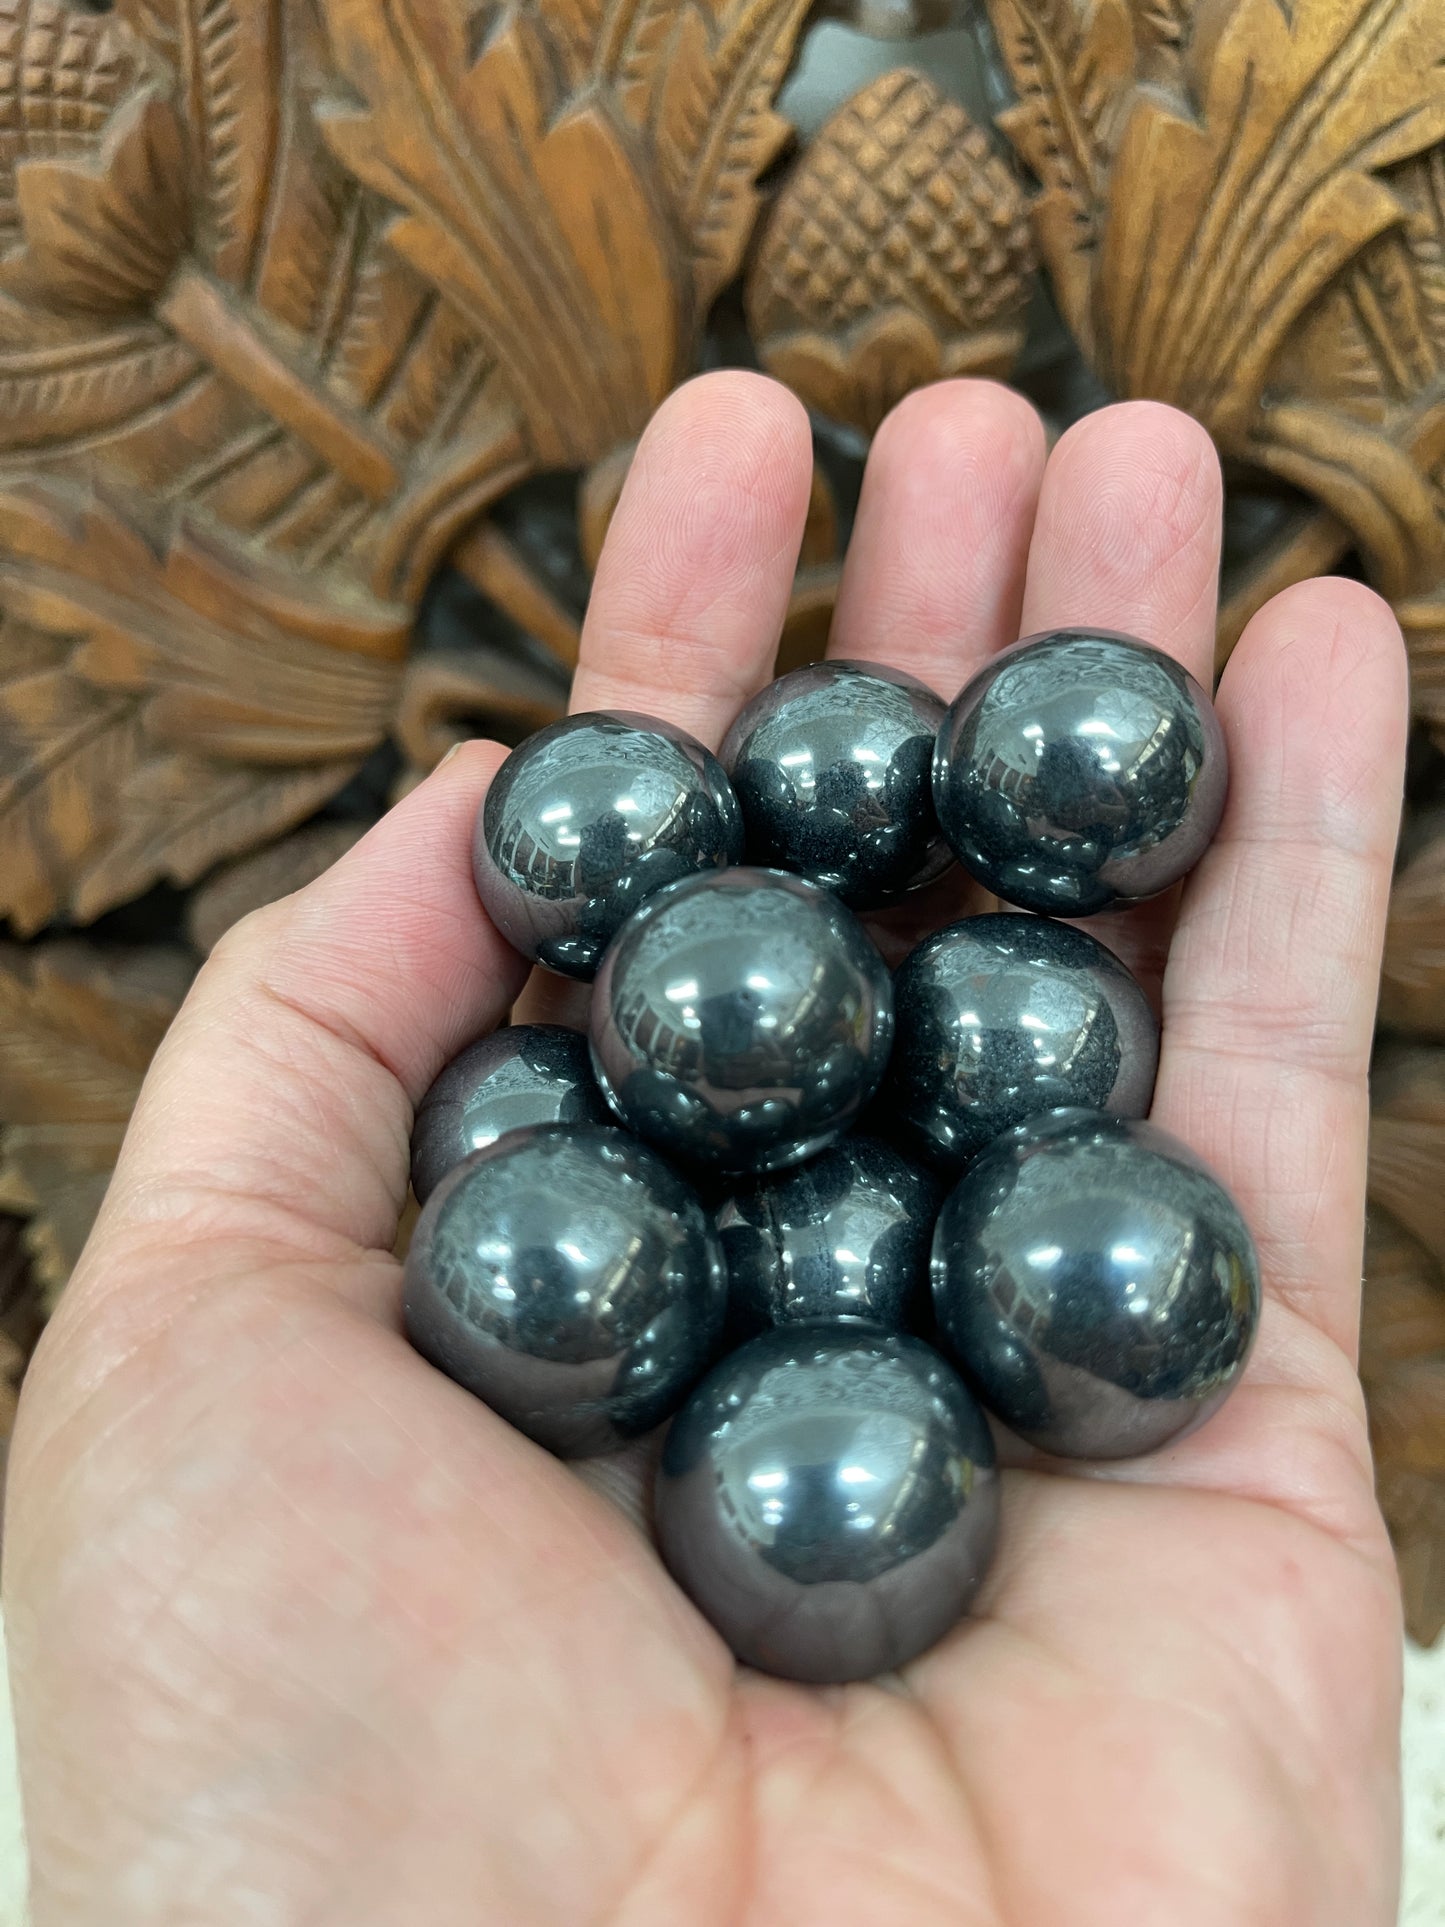 Black Obsidian Spheres